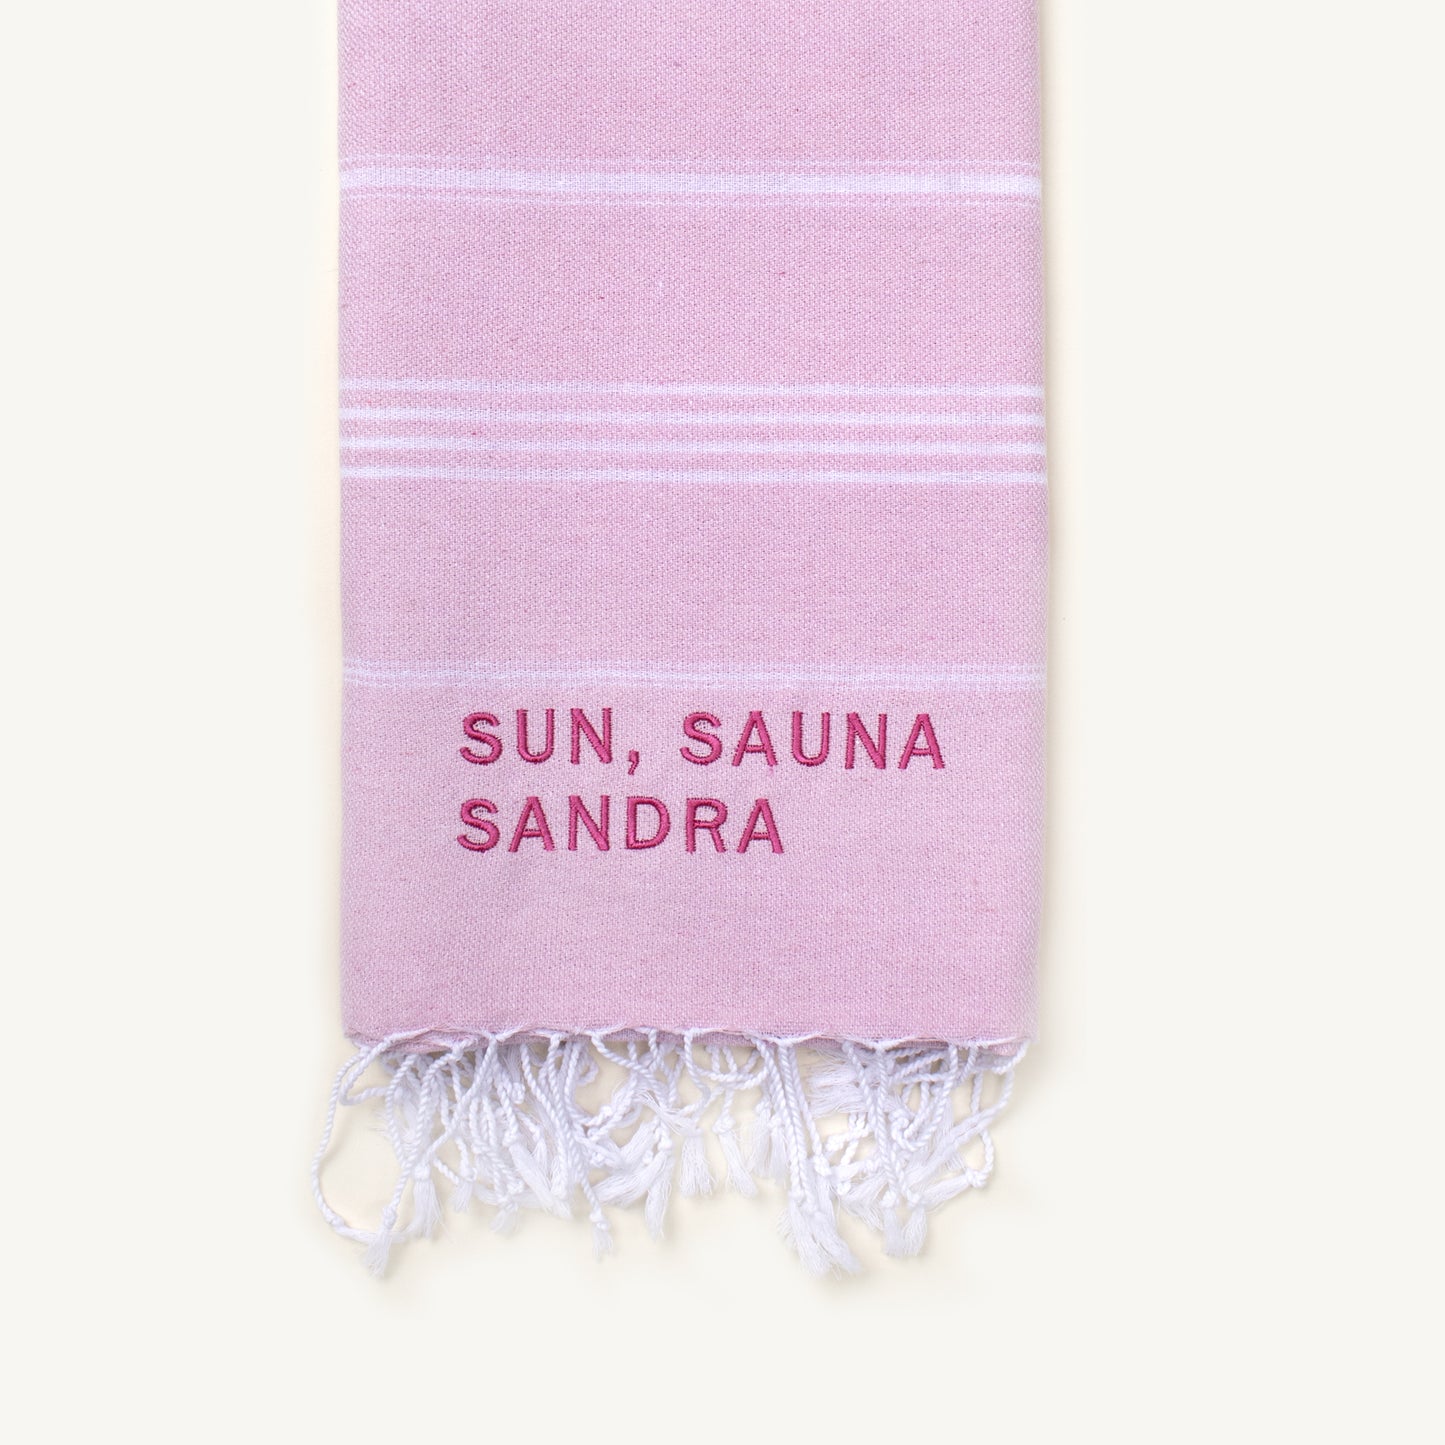 "SUN, SAUNA, SANDRA" Embroidered Turkish Towel